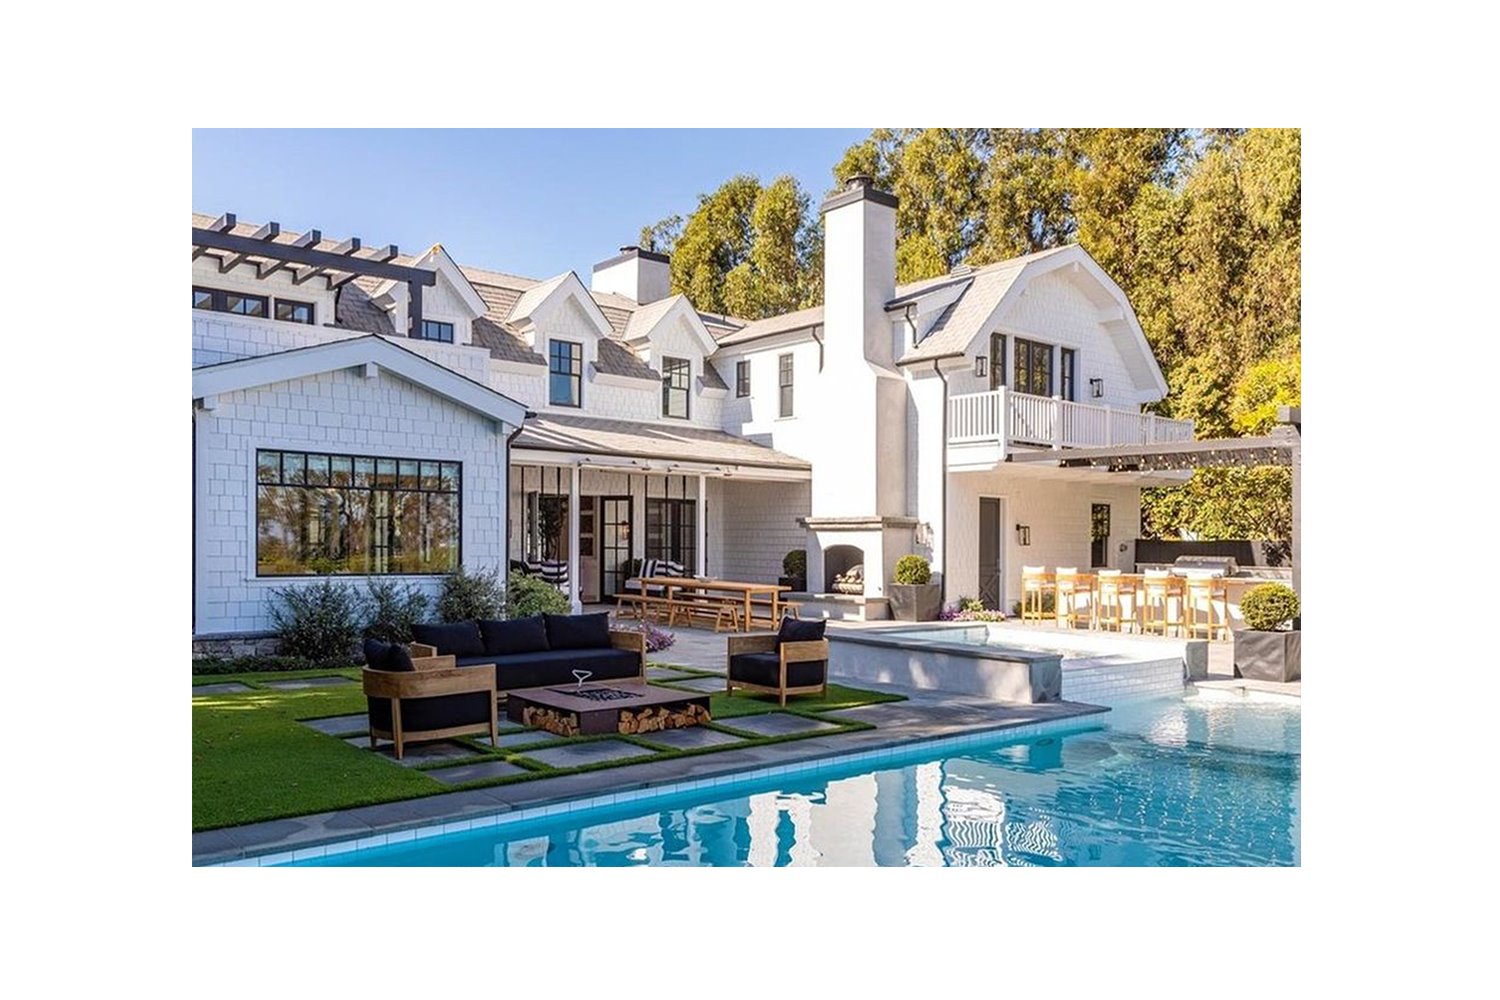 Casa Dakota Johnson y Chris Martin en Malibu jardin exterior con piscina